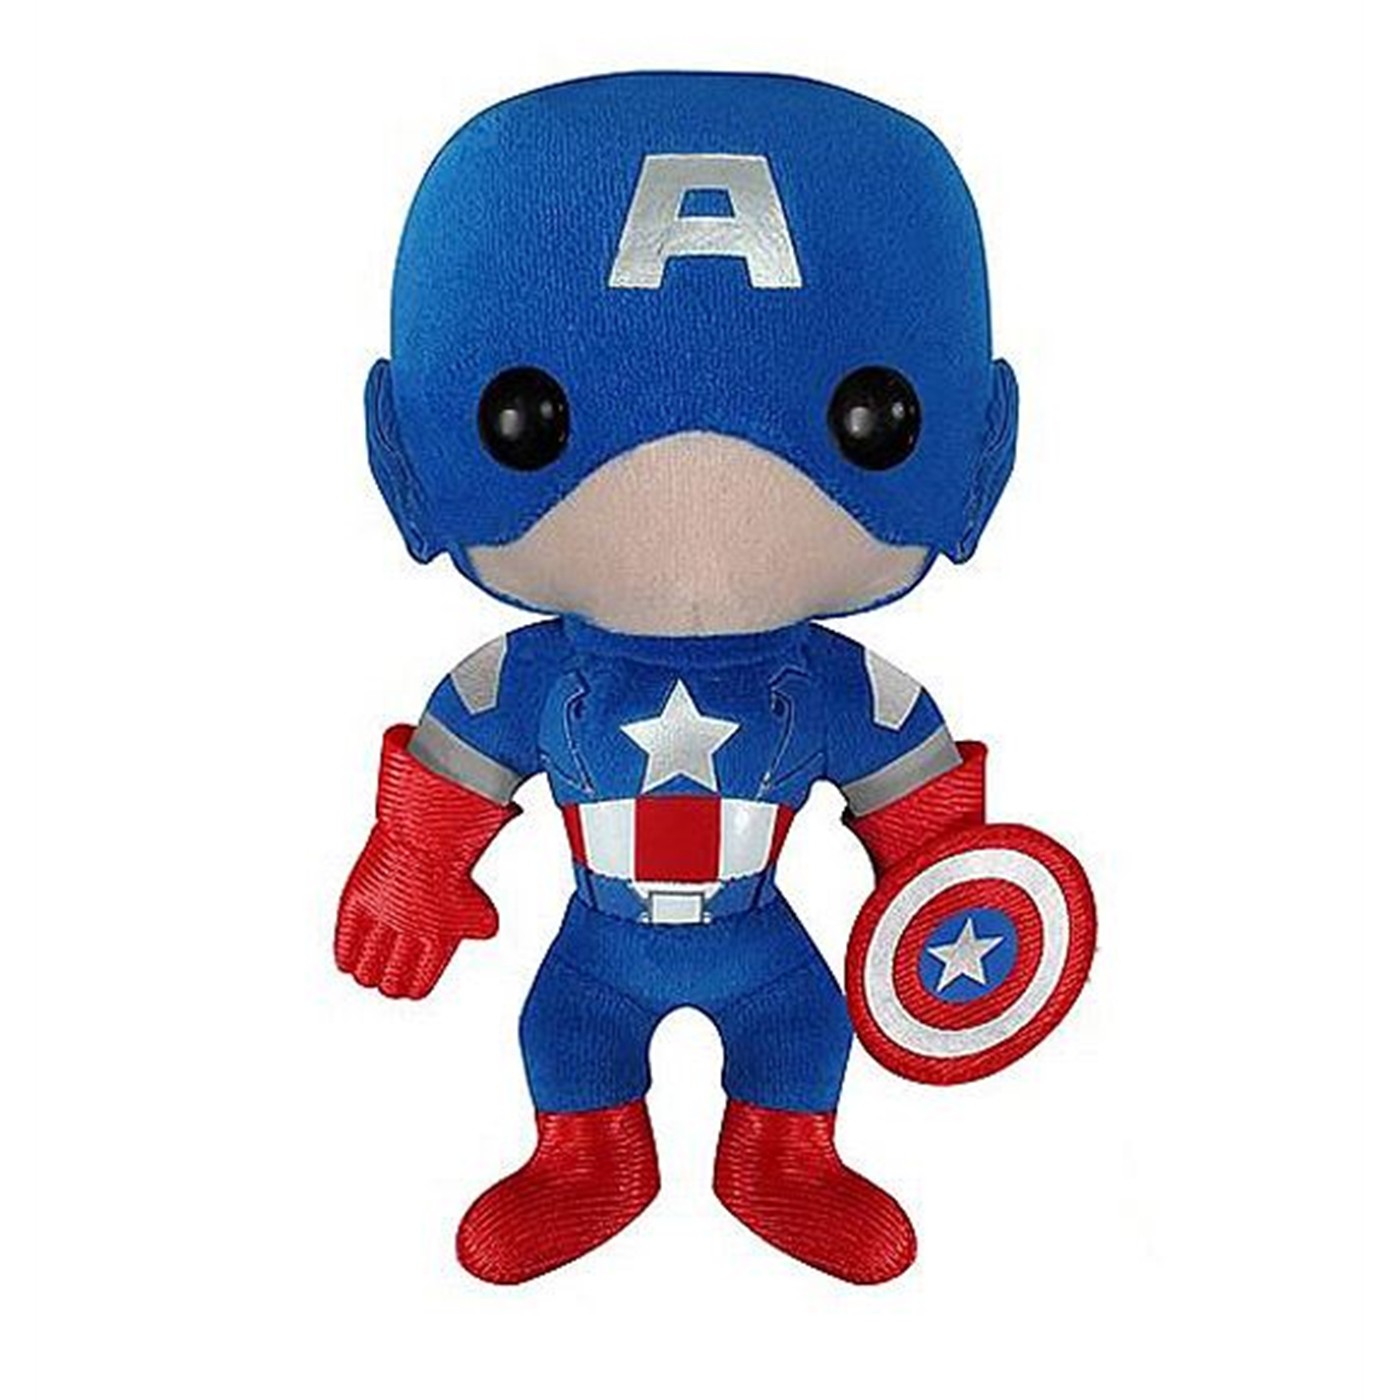 Captain America Avengers Movie Plush Toy